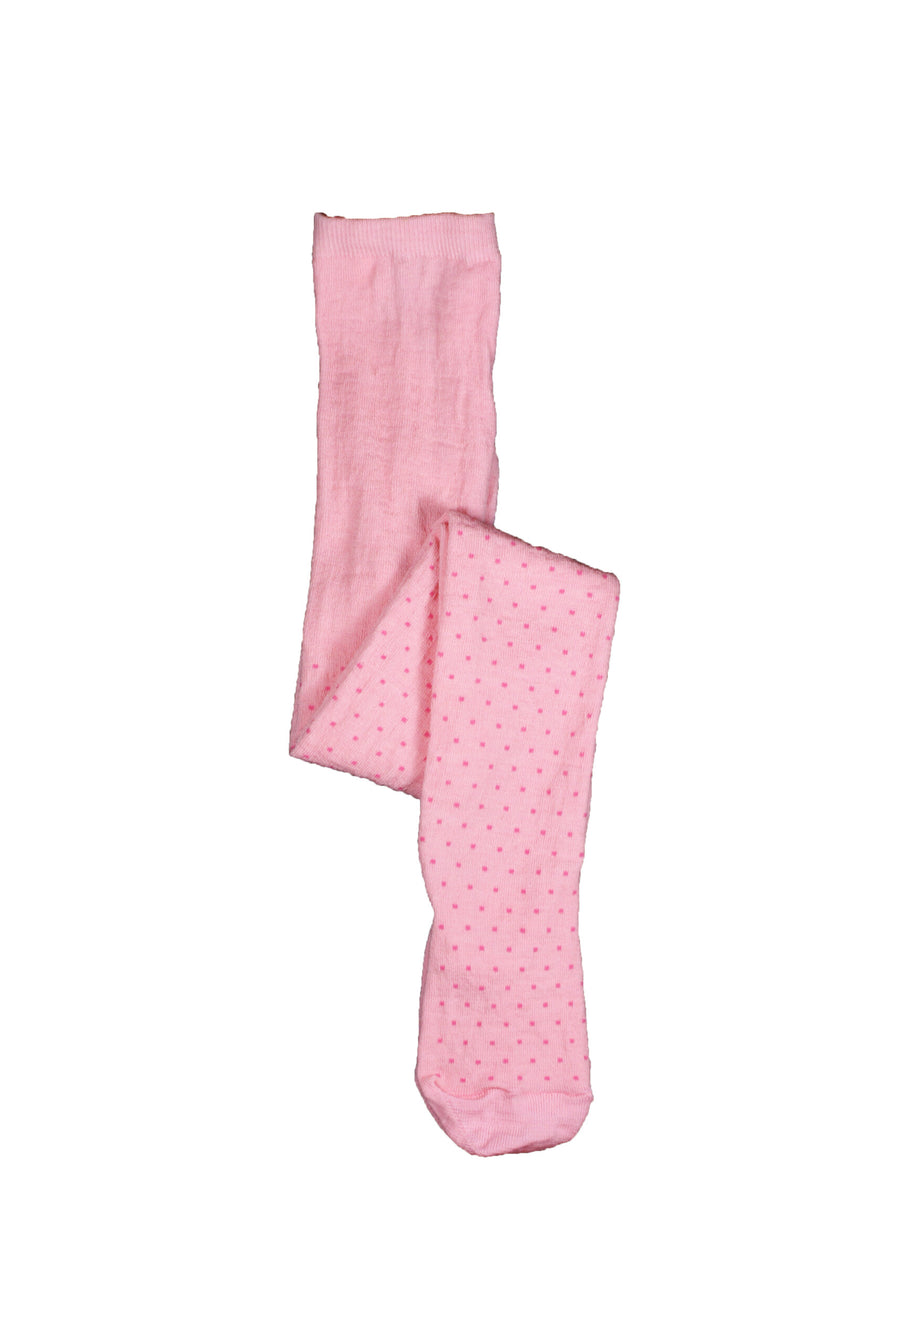 Merino Wool Tights - Light Pink/Dark Pink Spot